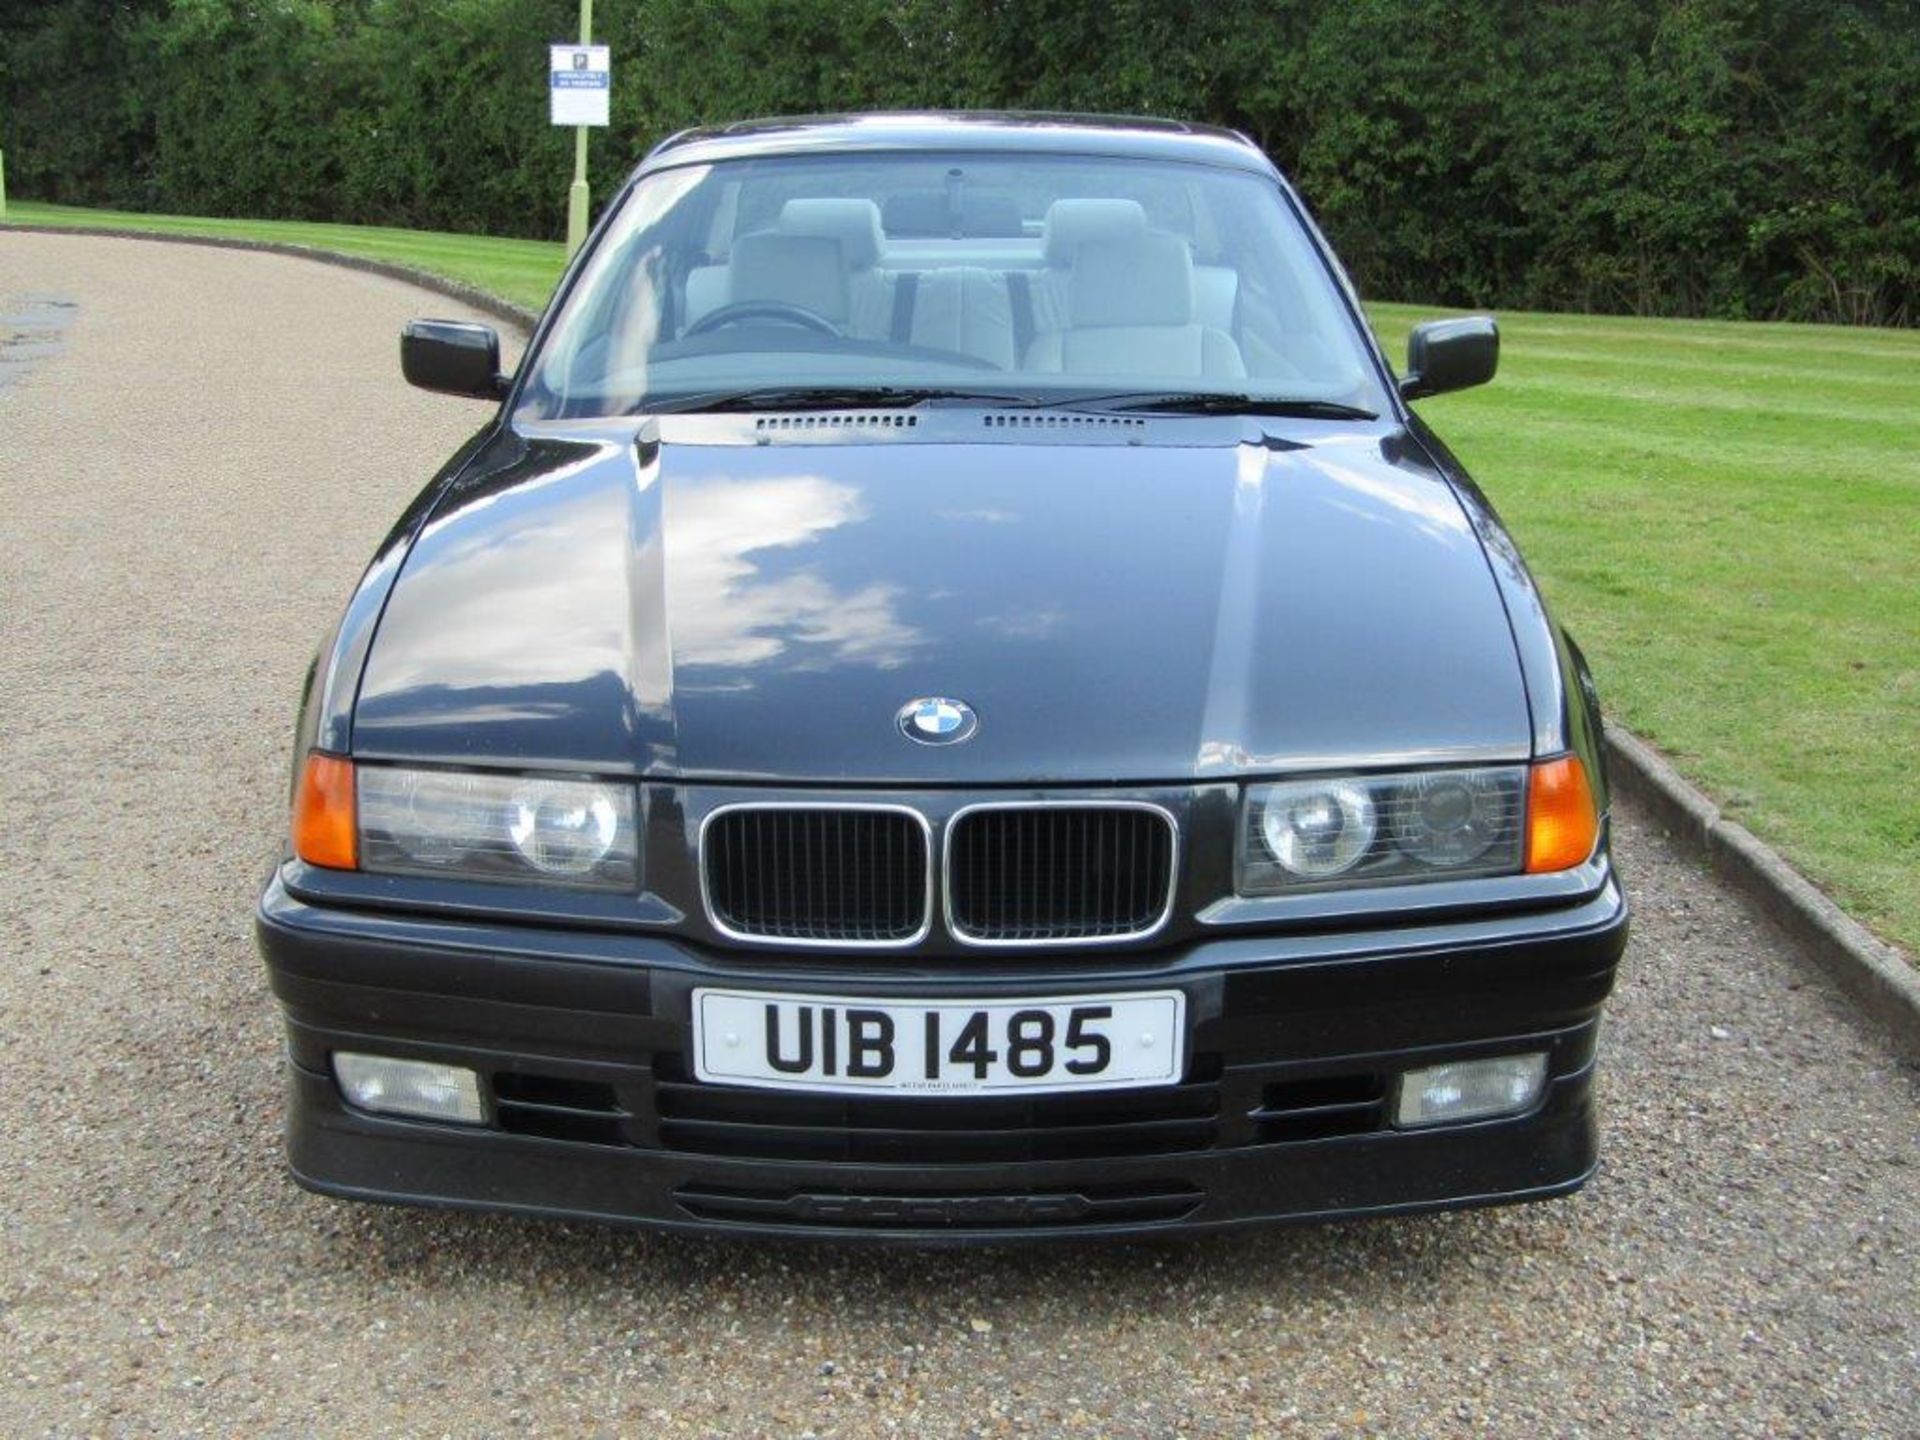 1993 BMW E36 325i Coupe - Image 5 of 20